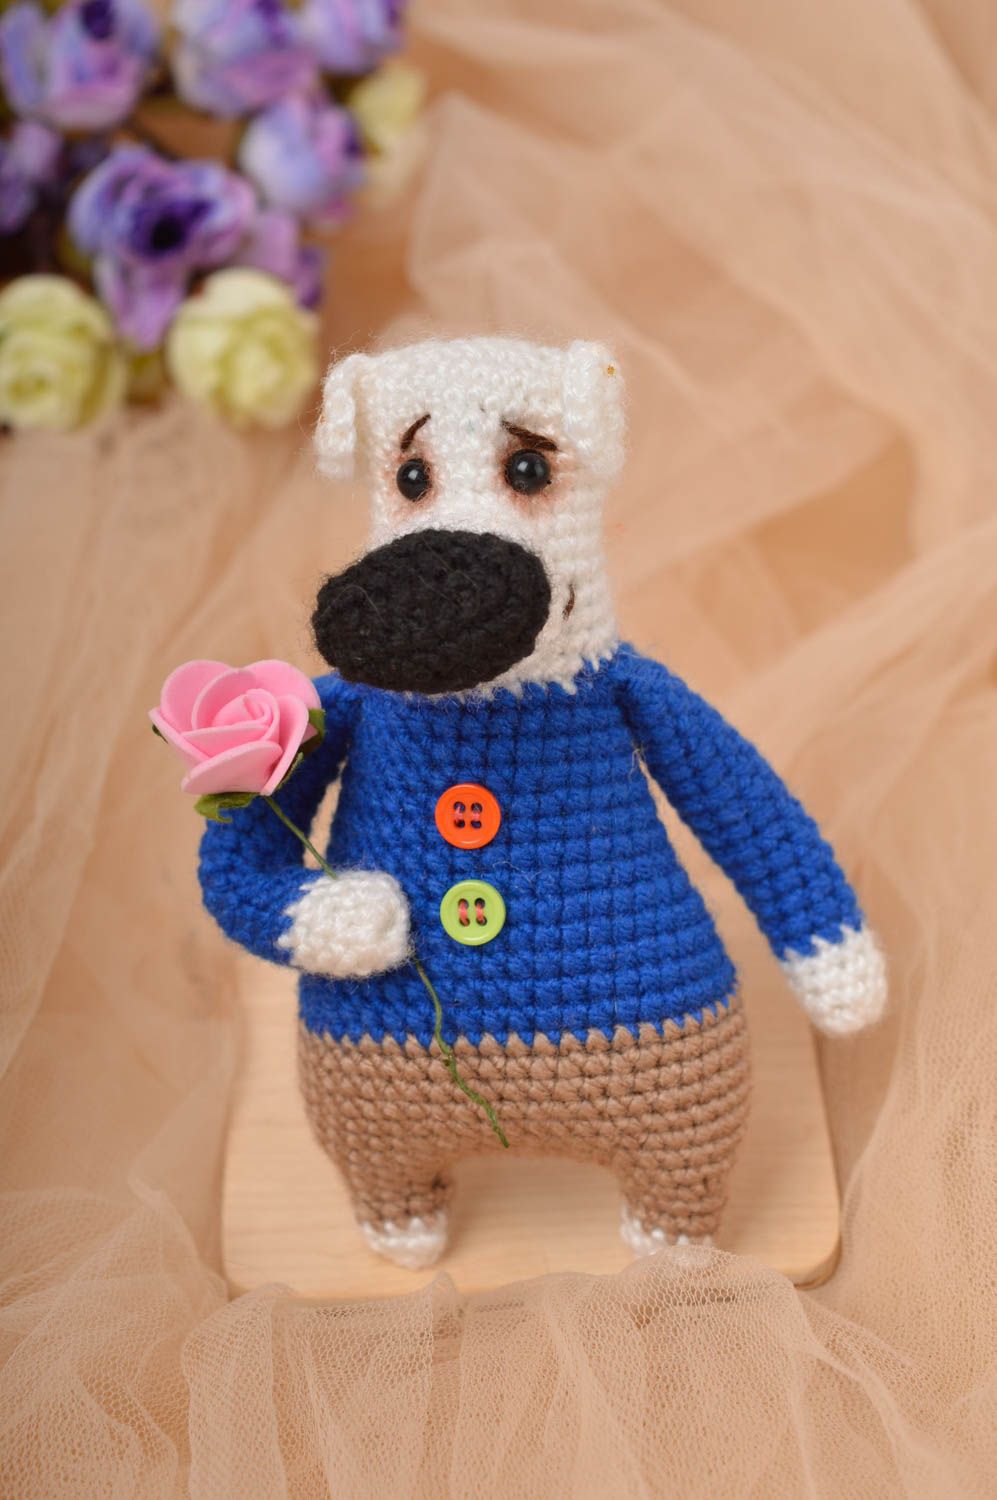 Hand-crocheted bear toy handmade crocheted toy for kids stylish nursery decor photo 1